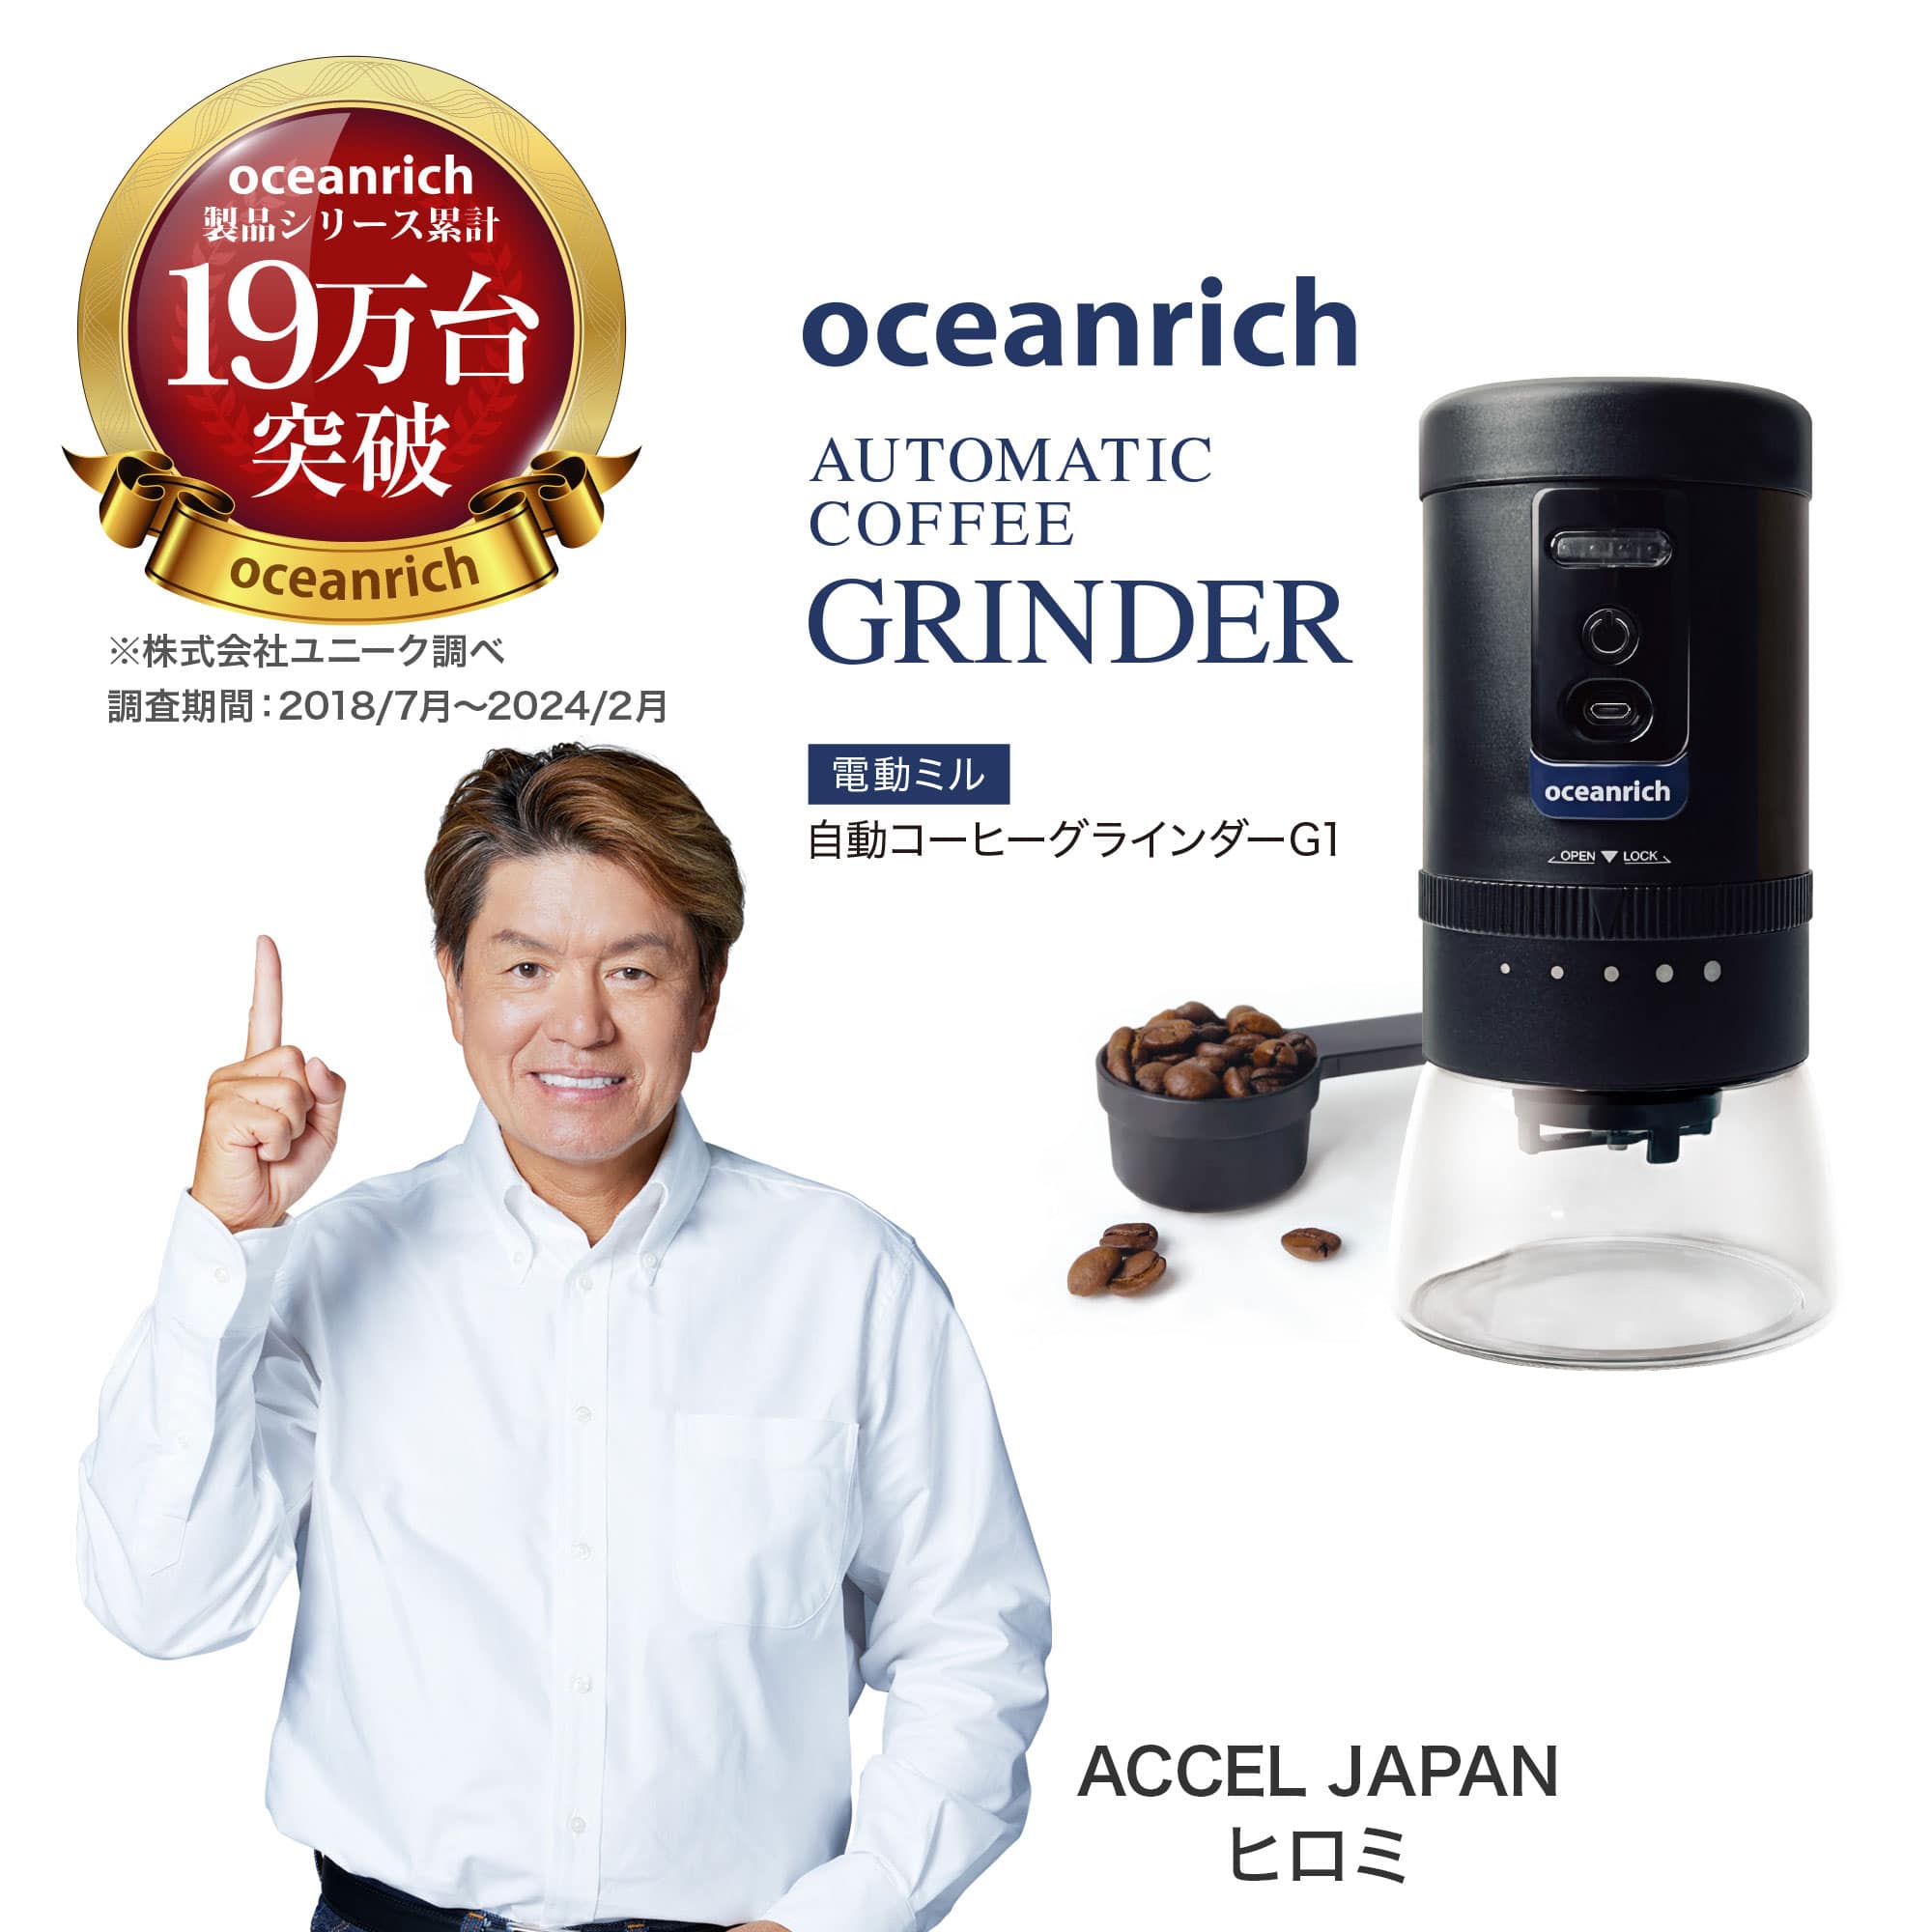 UNIQ x oceanrich ユニーク オーシャンリッチ自動コーヒーミル G2 Type